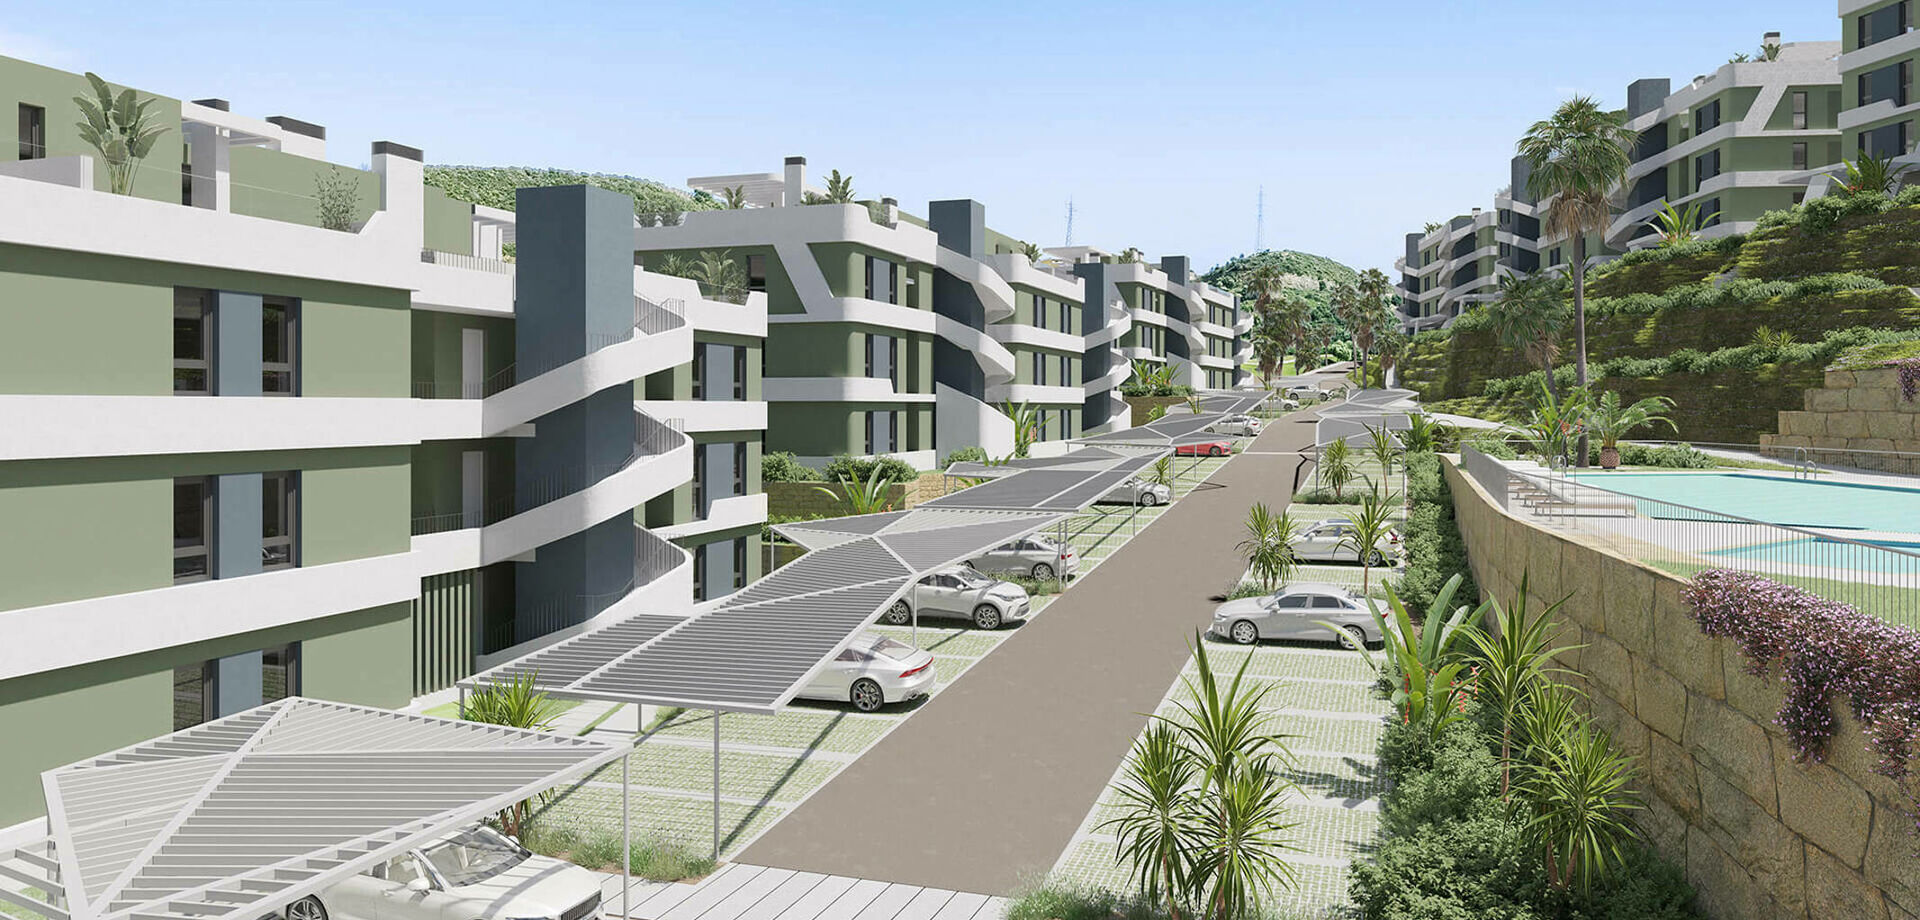 391 - Bahia - Modern Apartments in Mijas à 